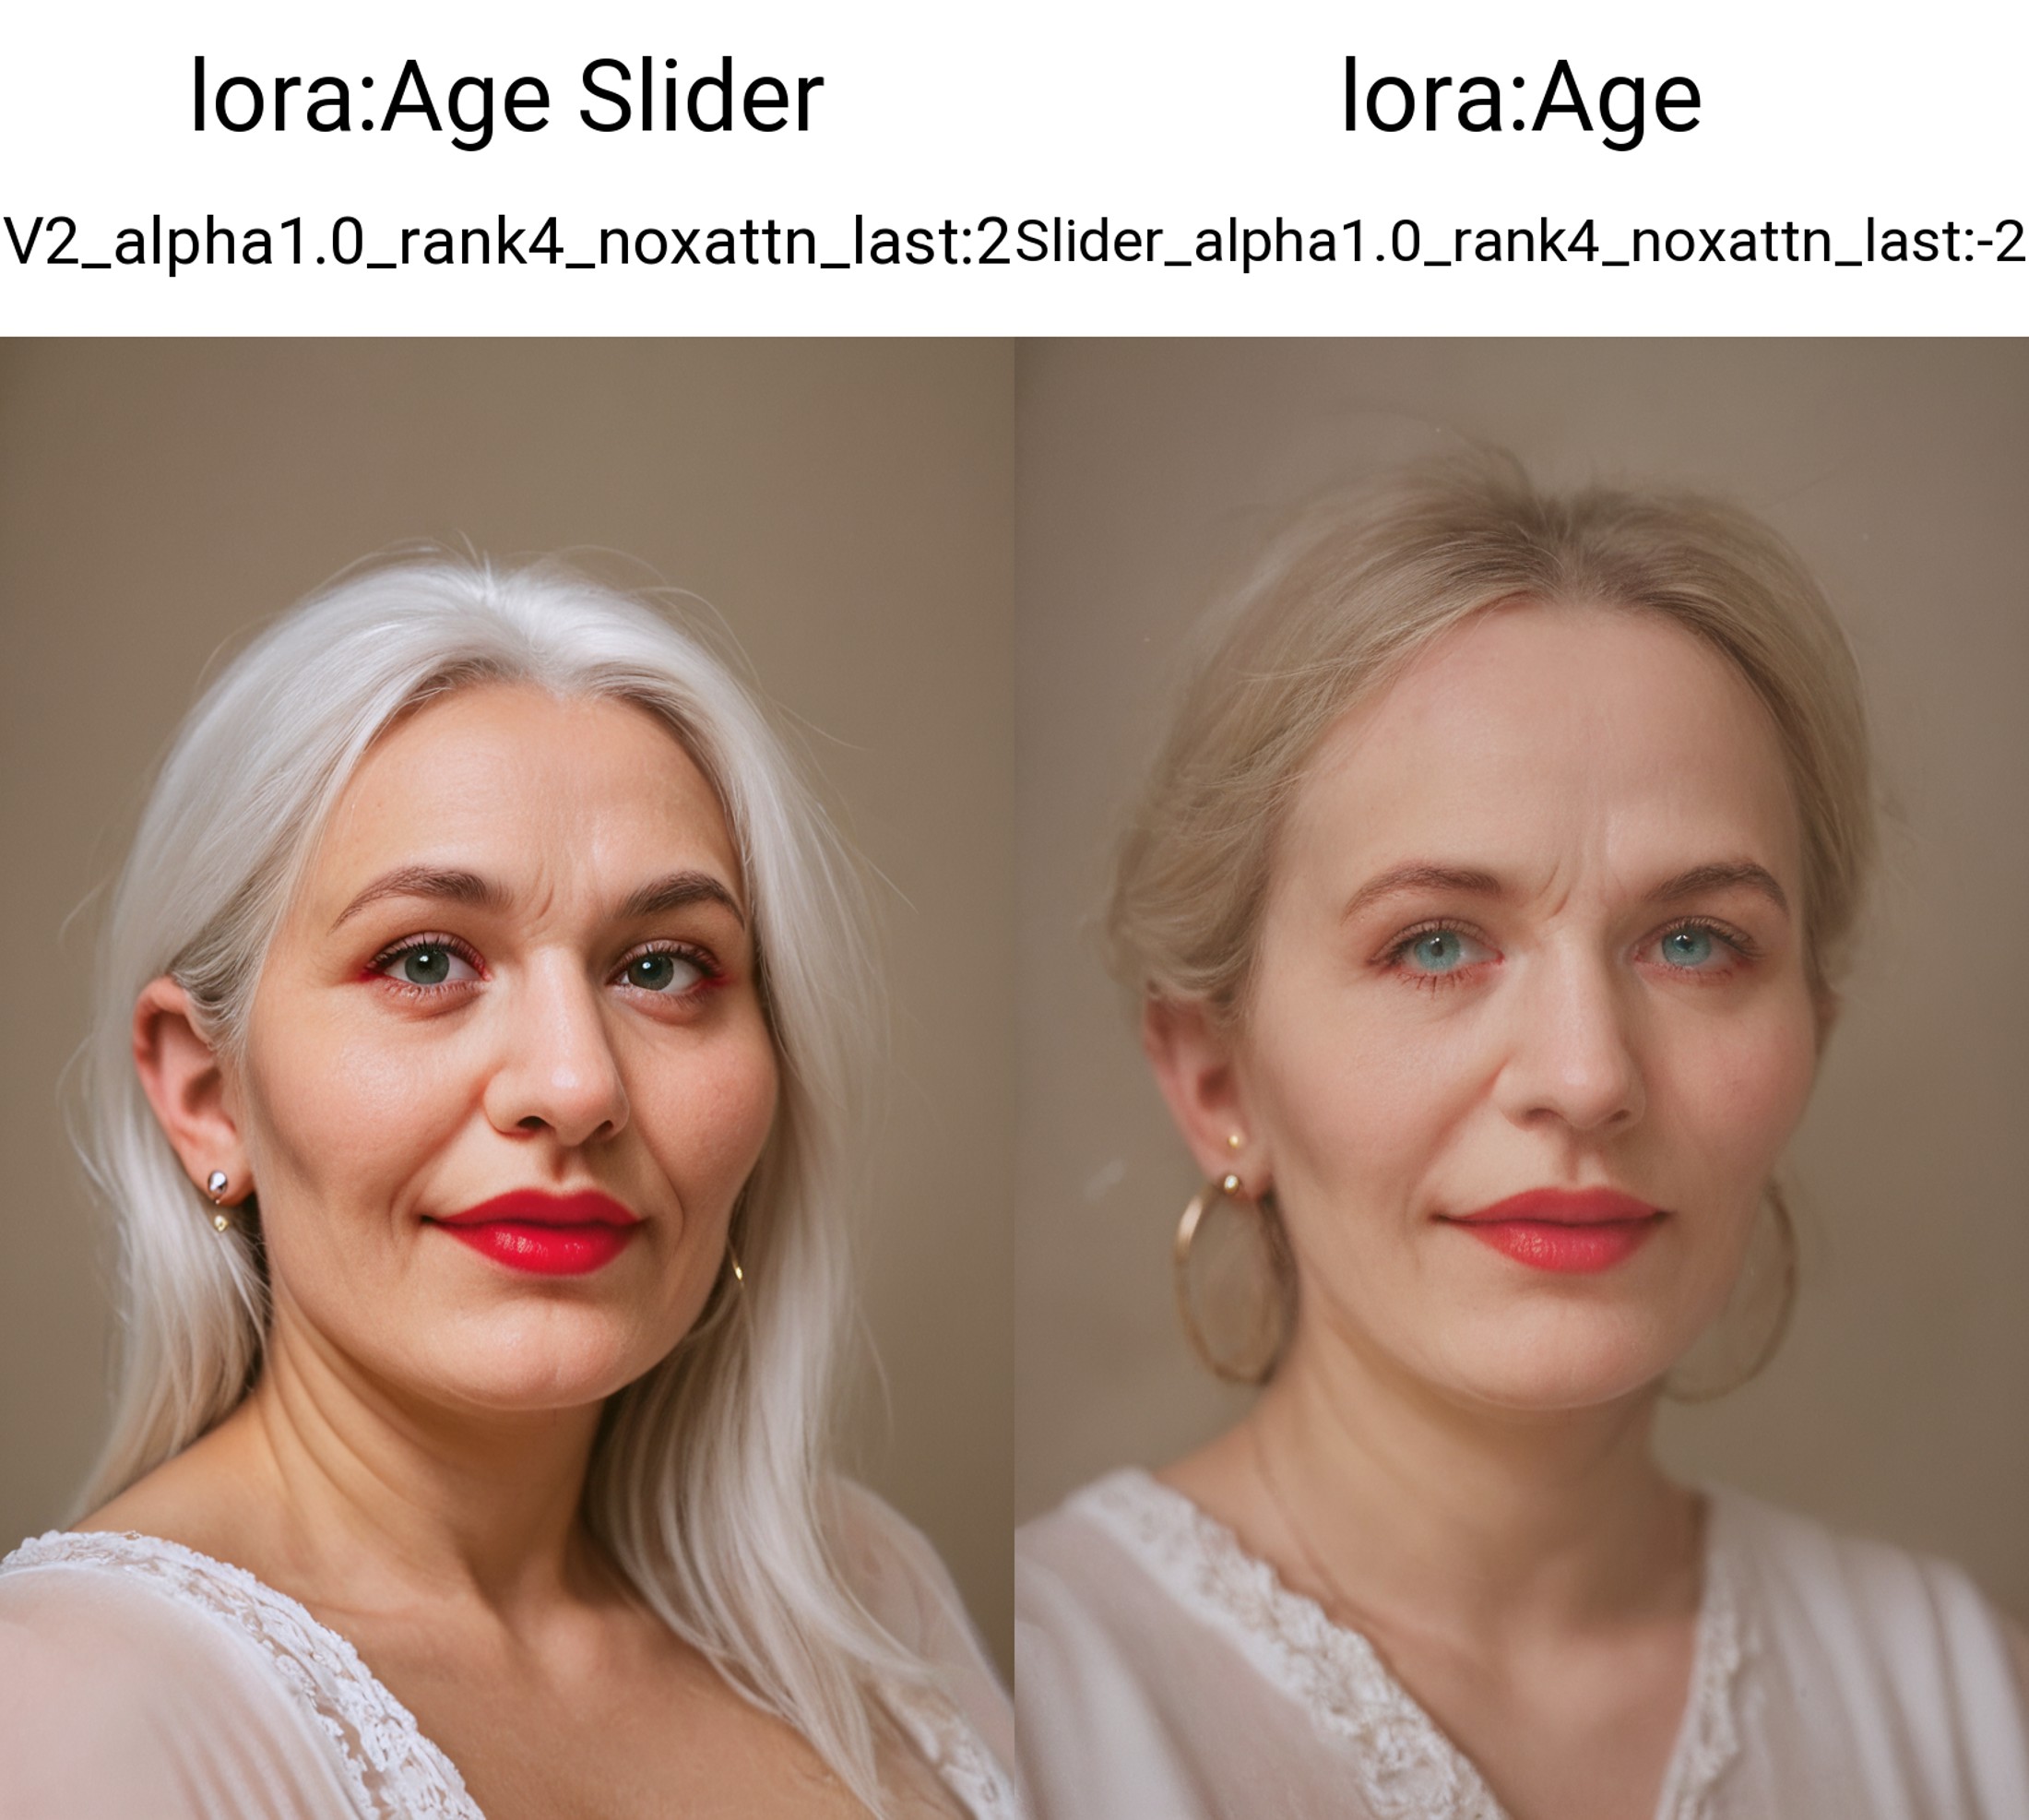 woman, <lora:Age Slider V2_alpha1.0_rank4_noxattn_last:2>, (portrait),